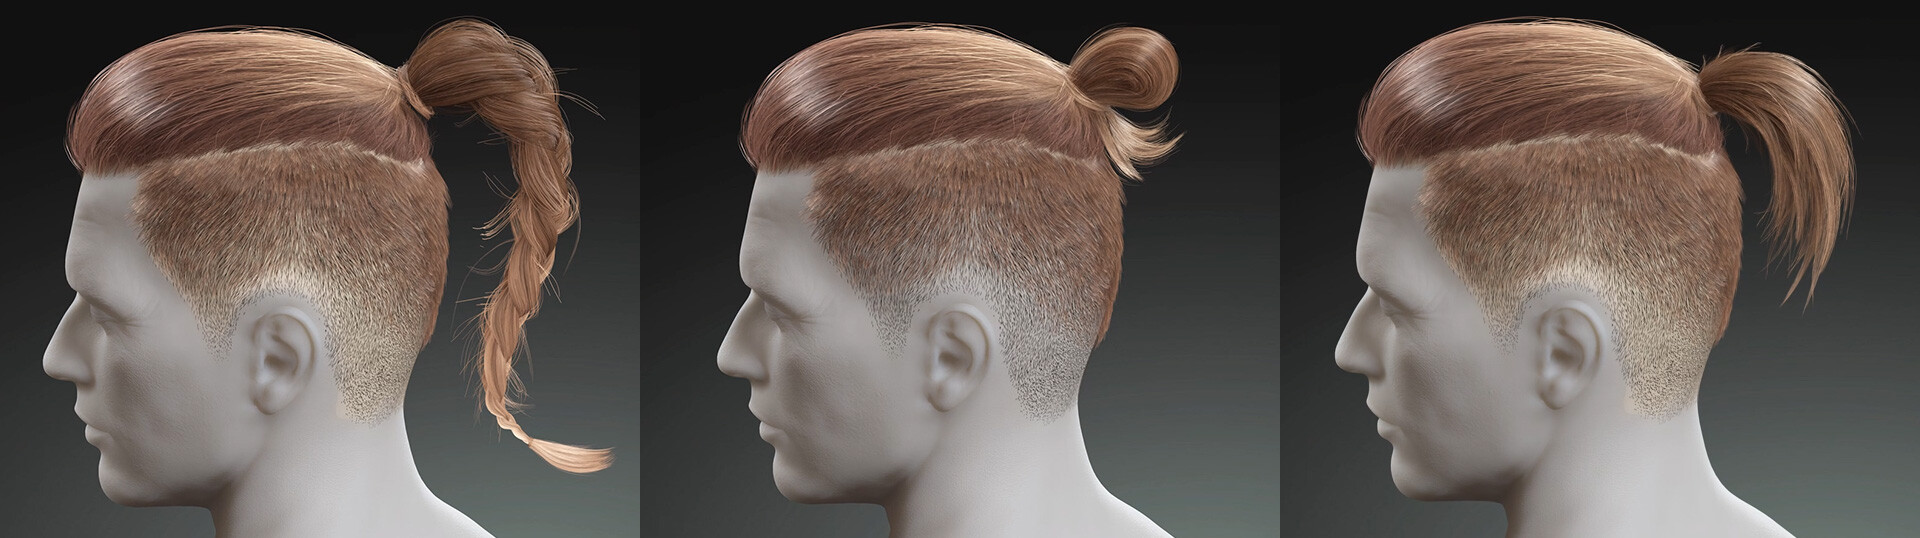 Reallusion Art - Male Undercut Hairstyles